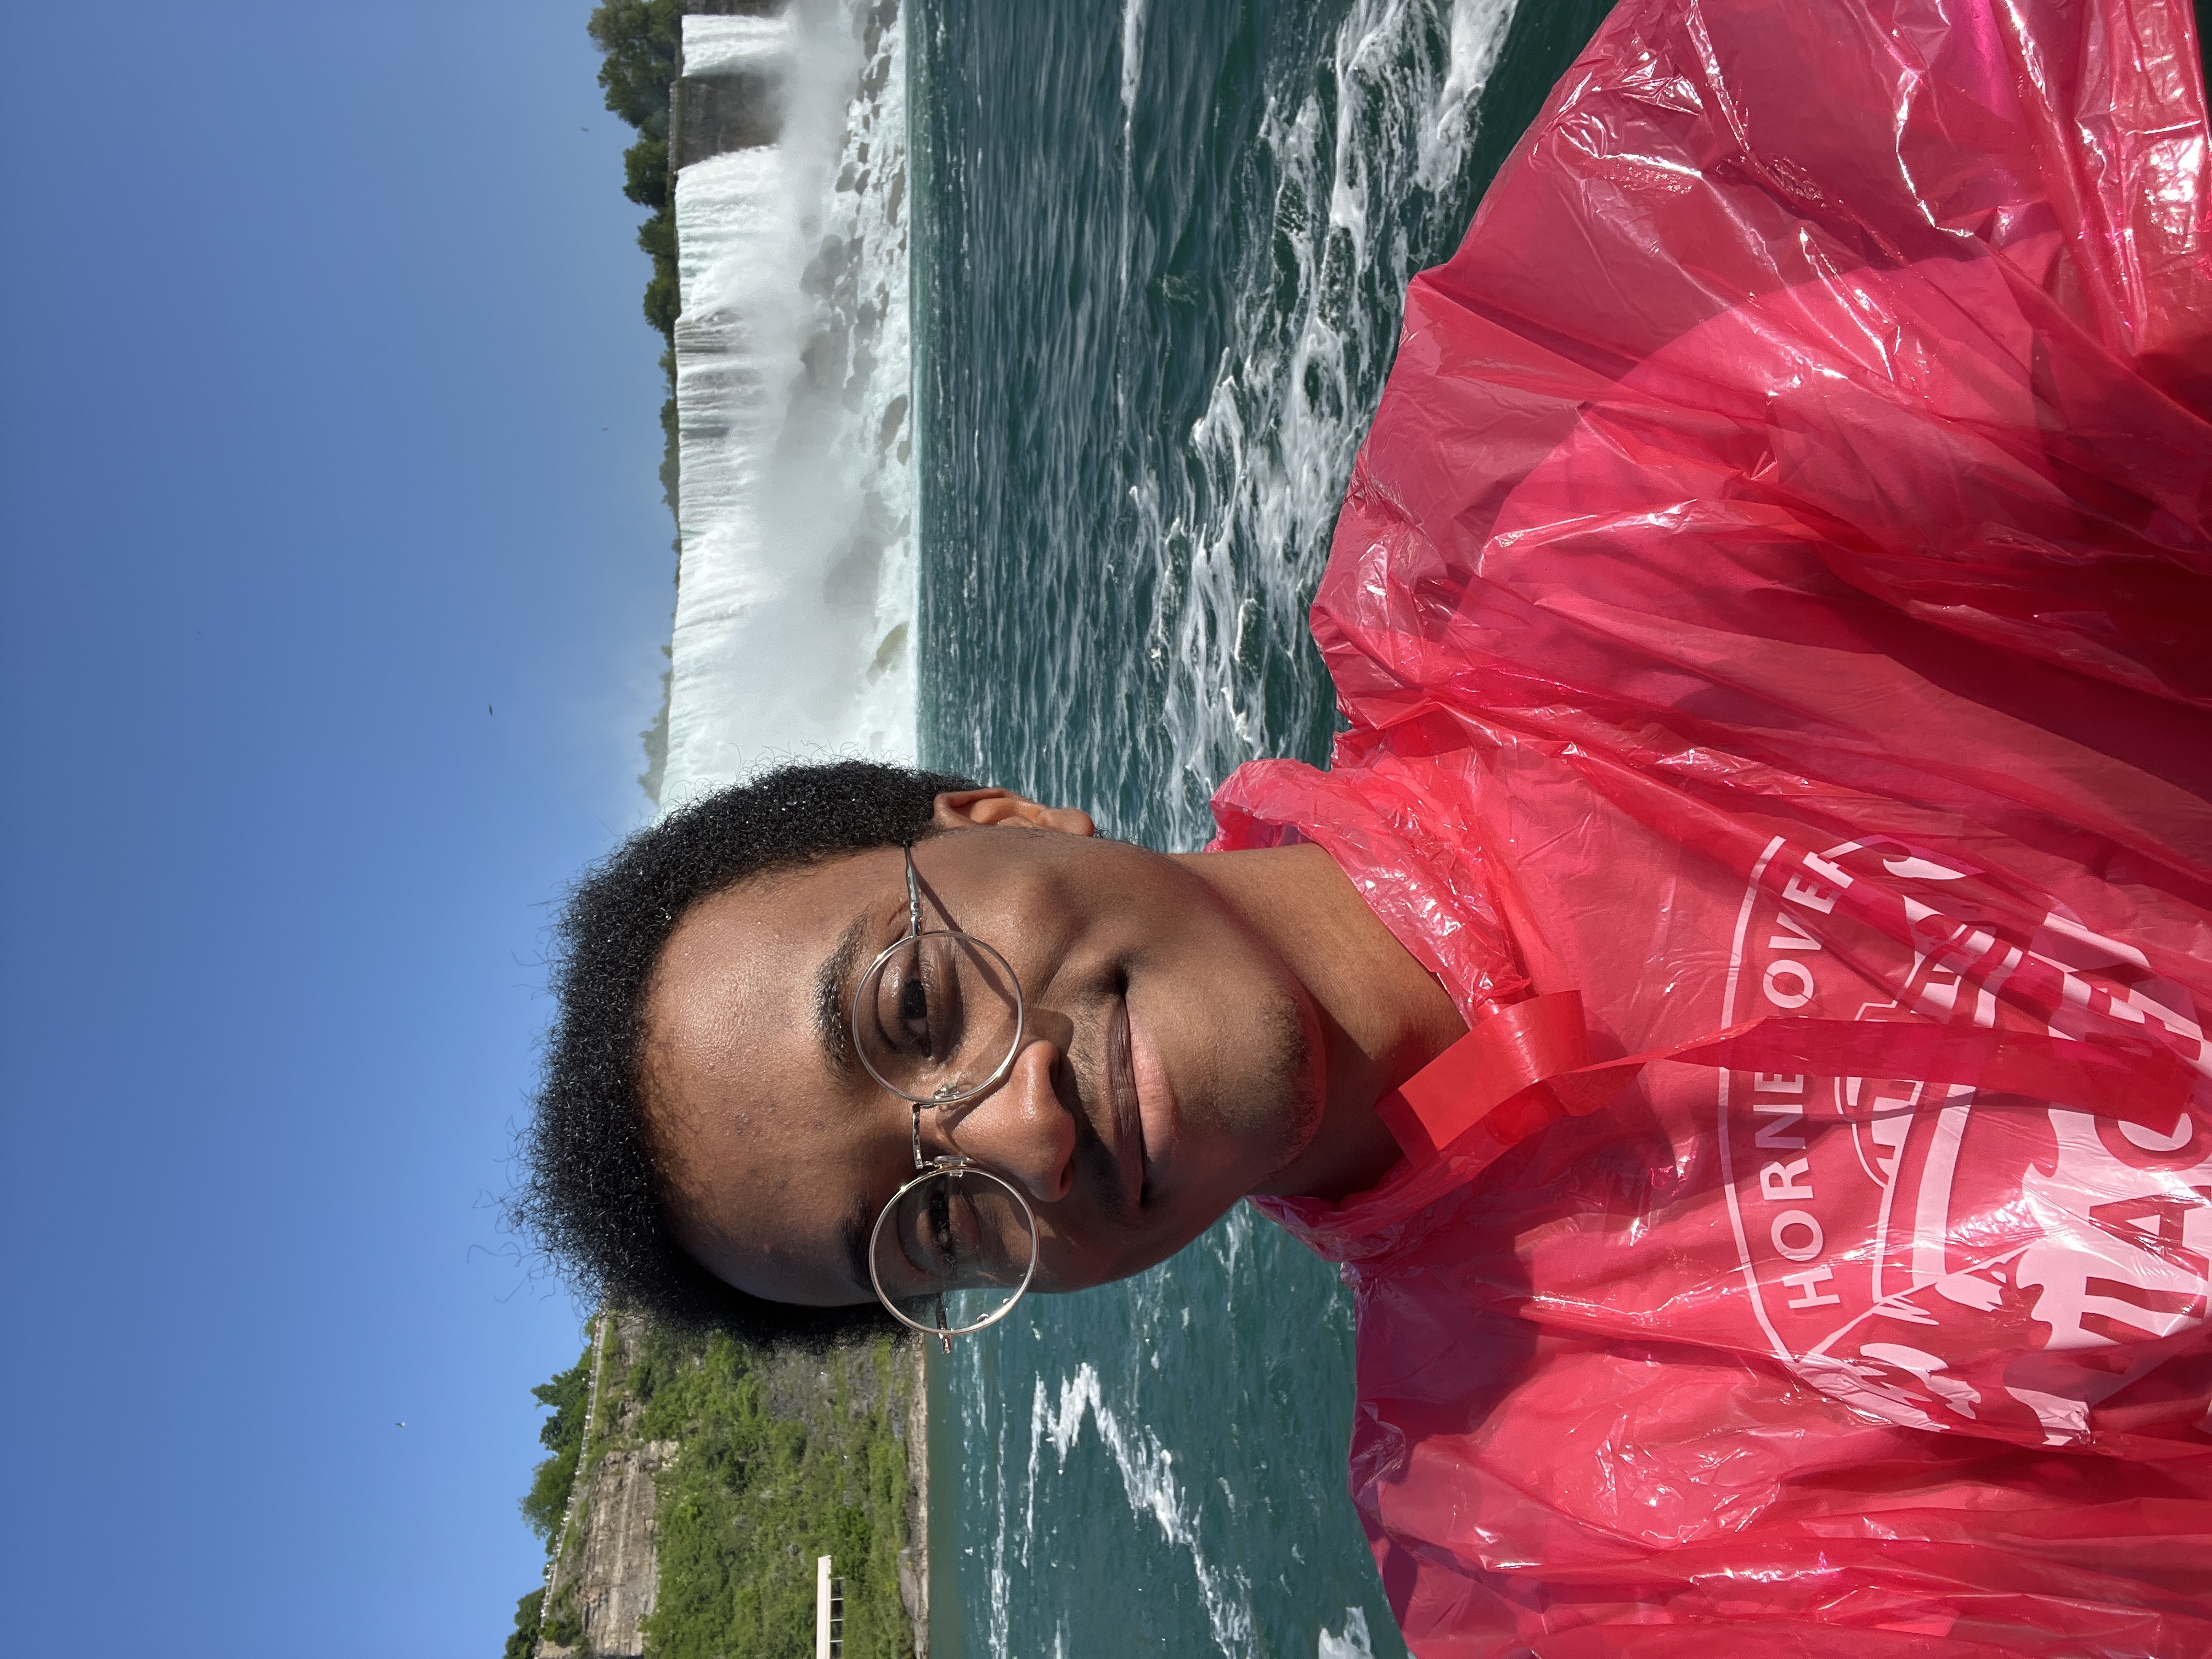 This is me at Niagara Falls in Ontario, Canada!